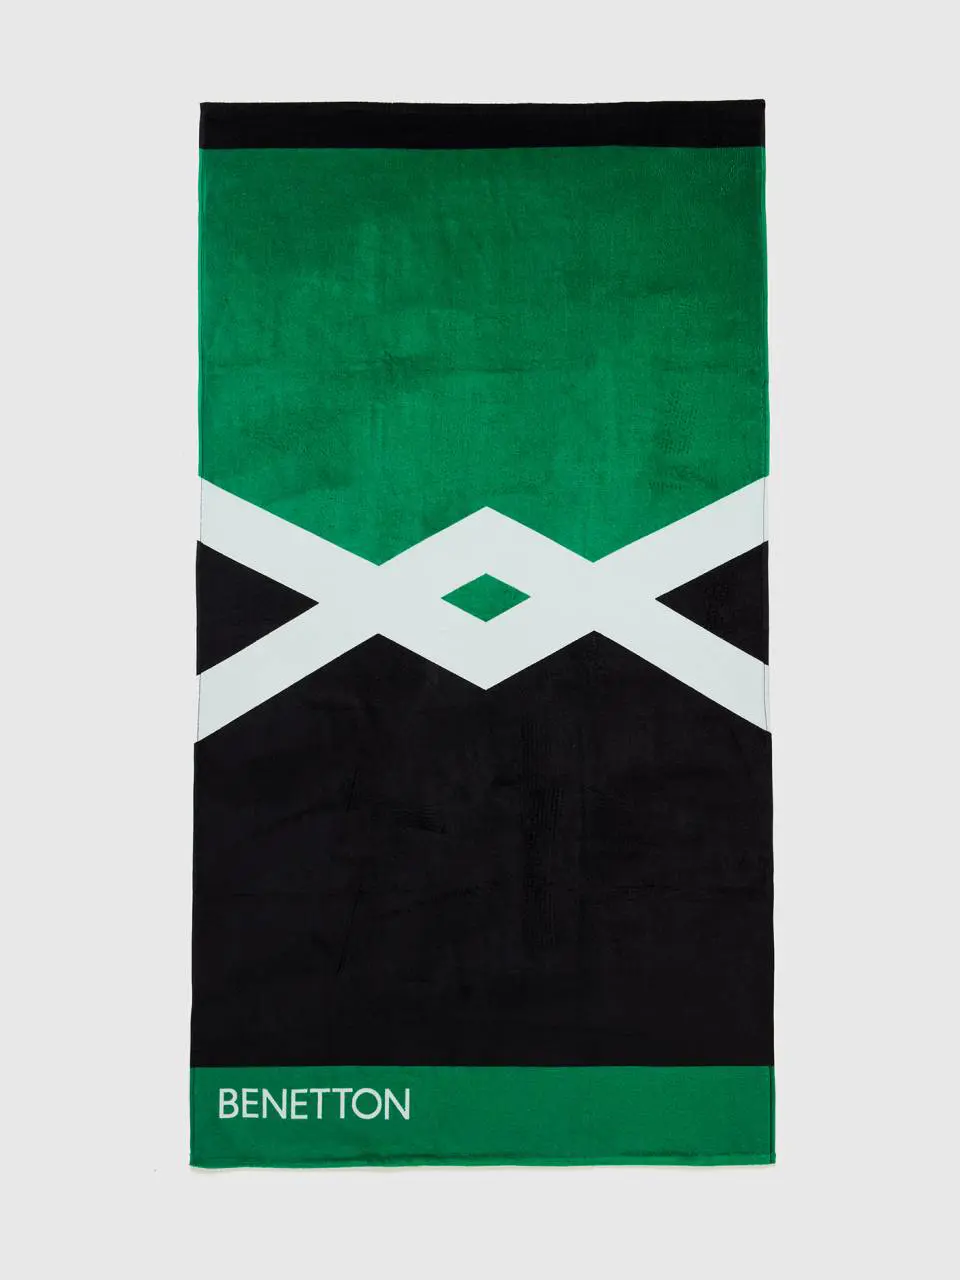 Benetton green and black beach towel. 1